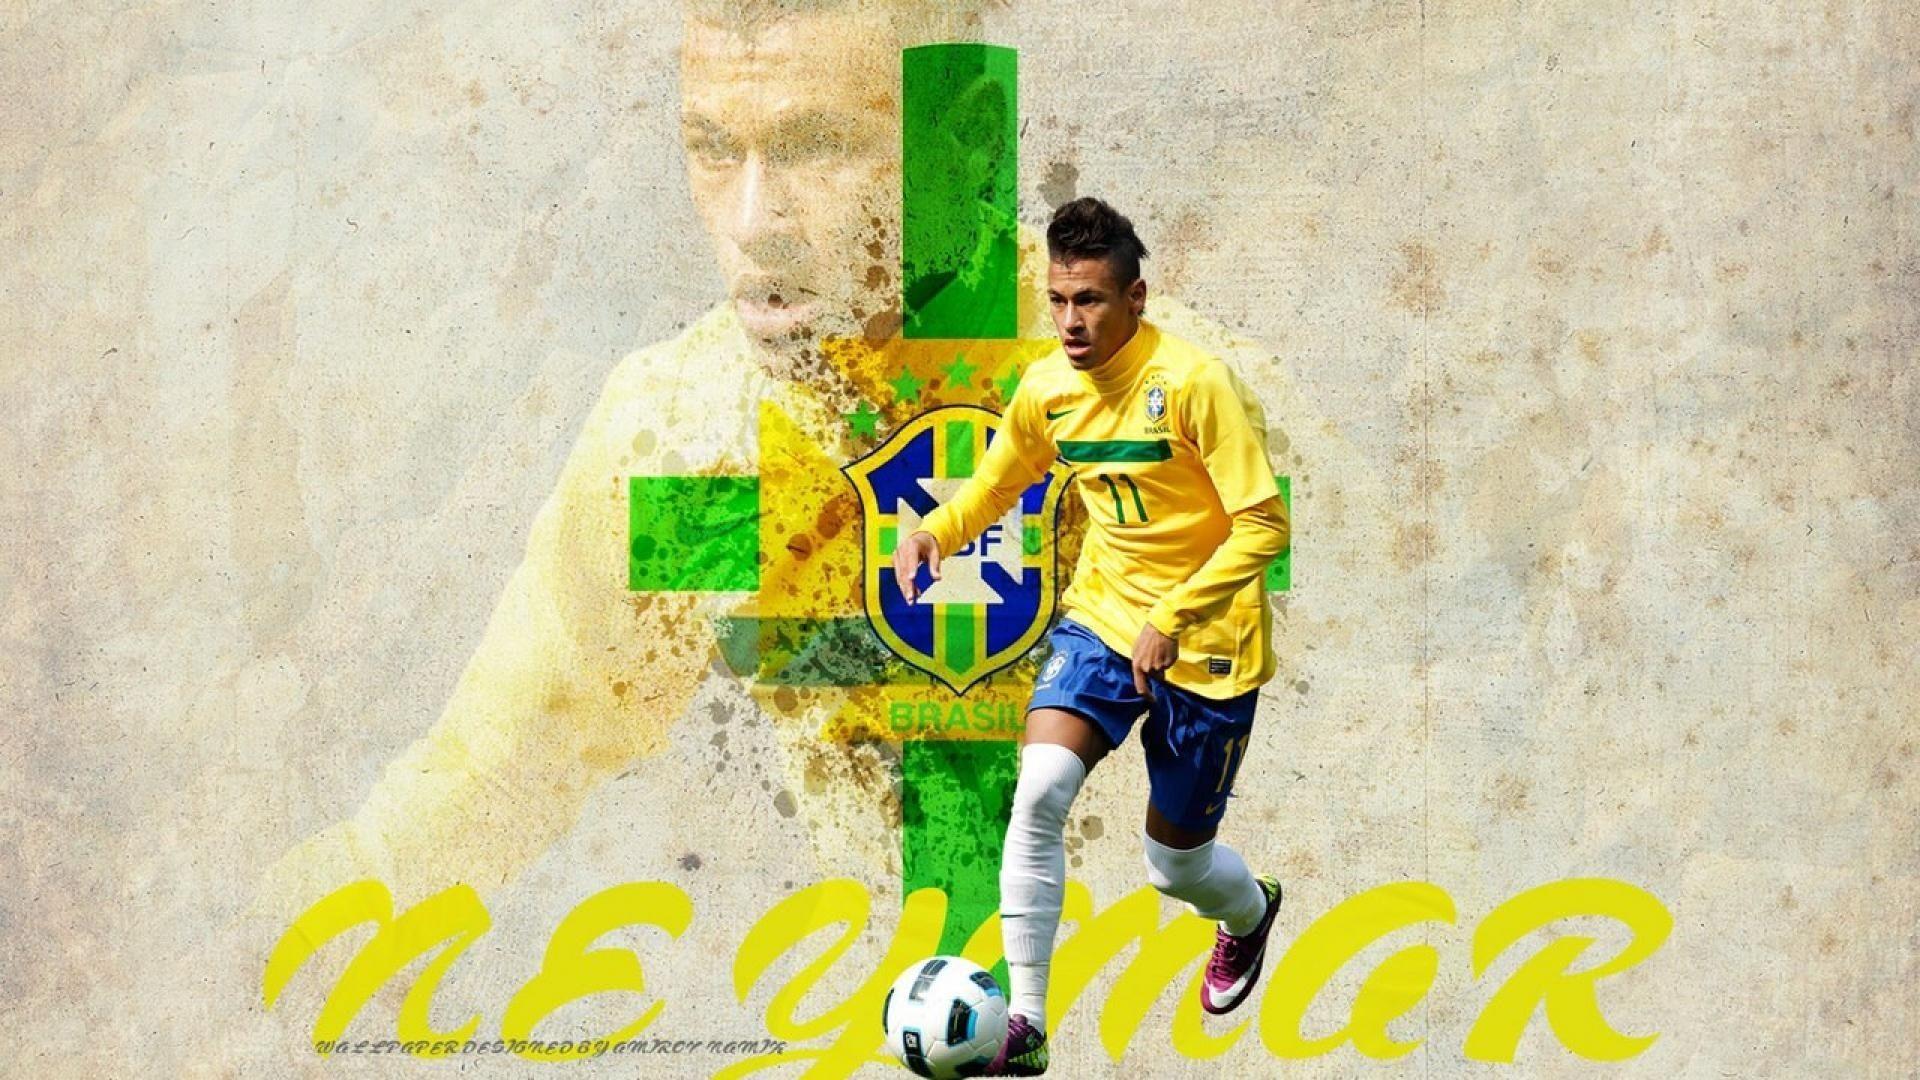 Neymar Nike wallpaper Neymar